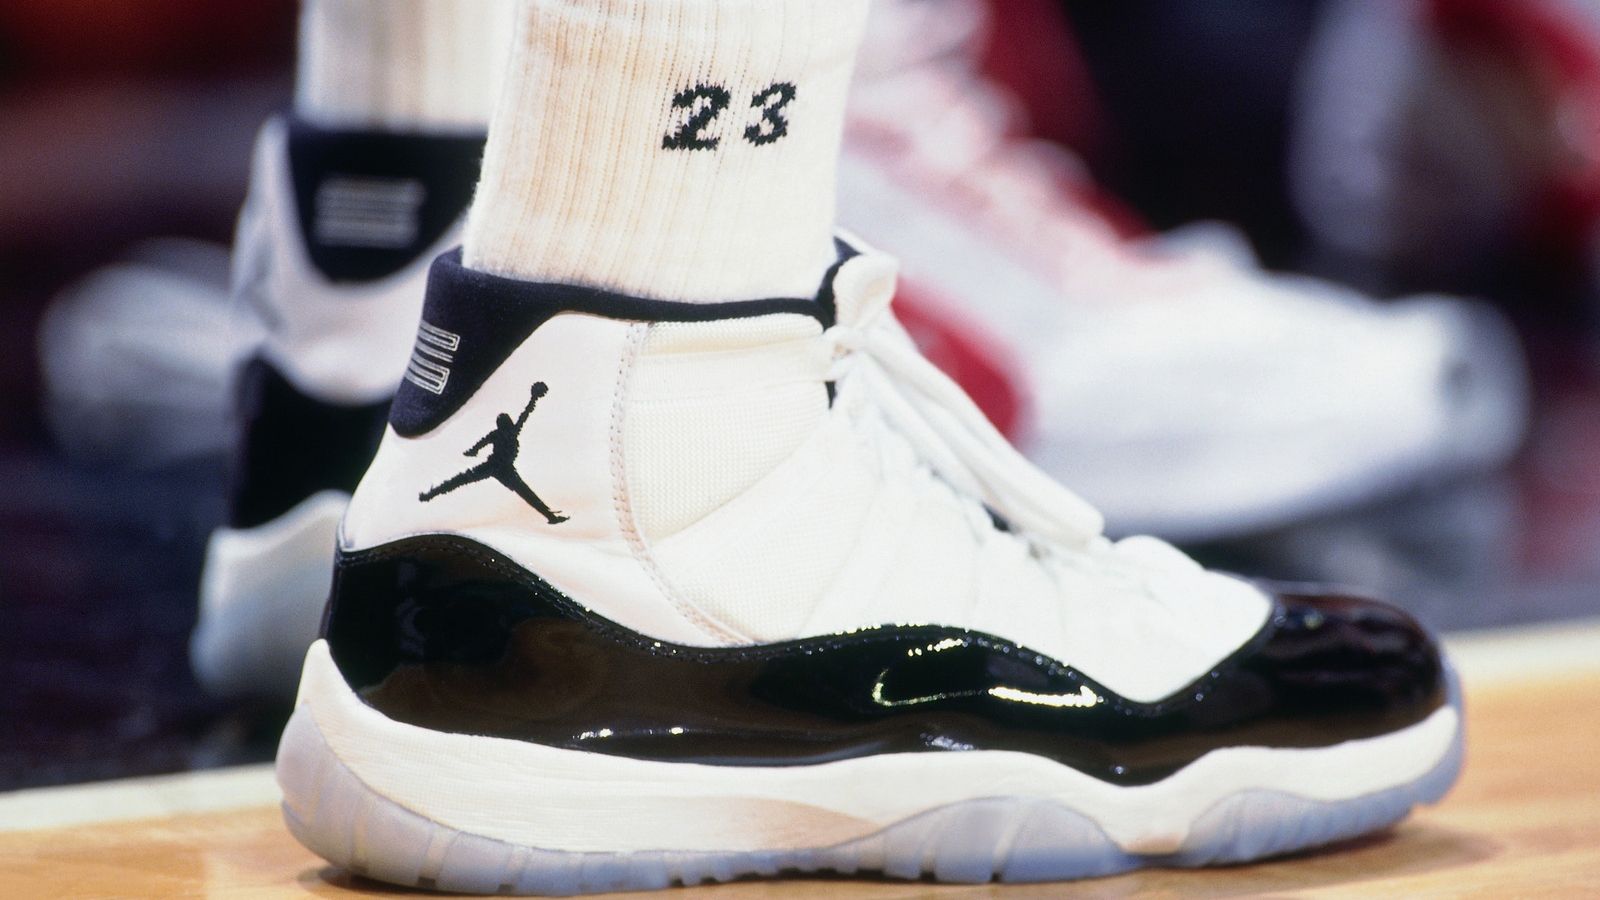 How the 'Concord' Air Jordan 11 became sneaker culture's grail